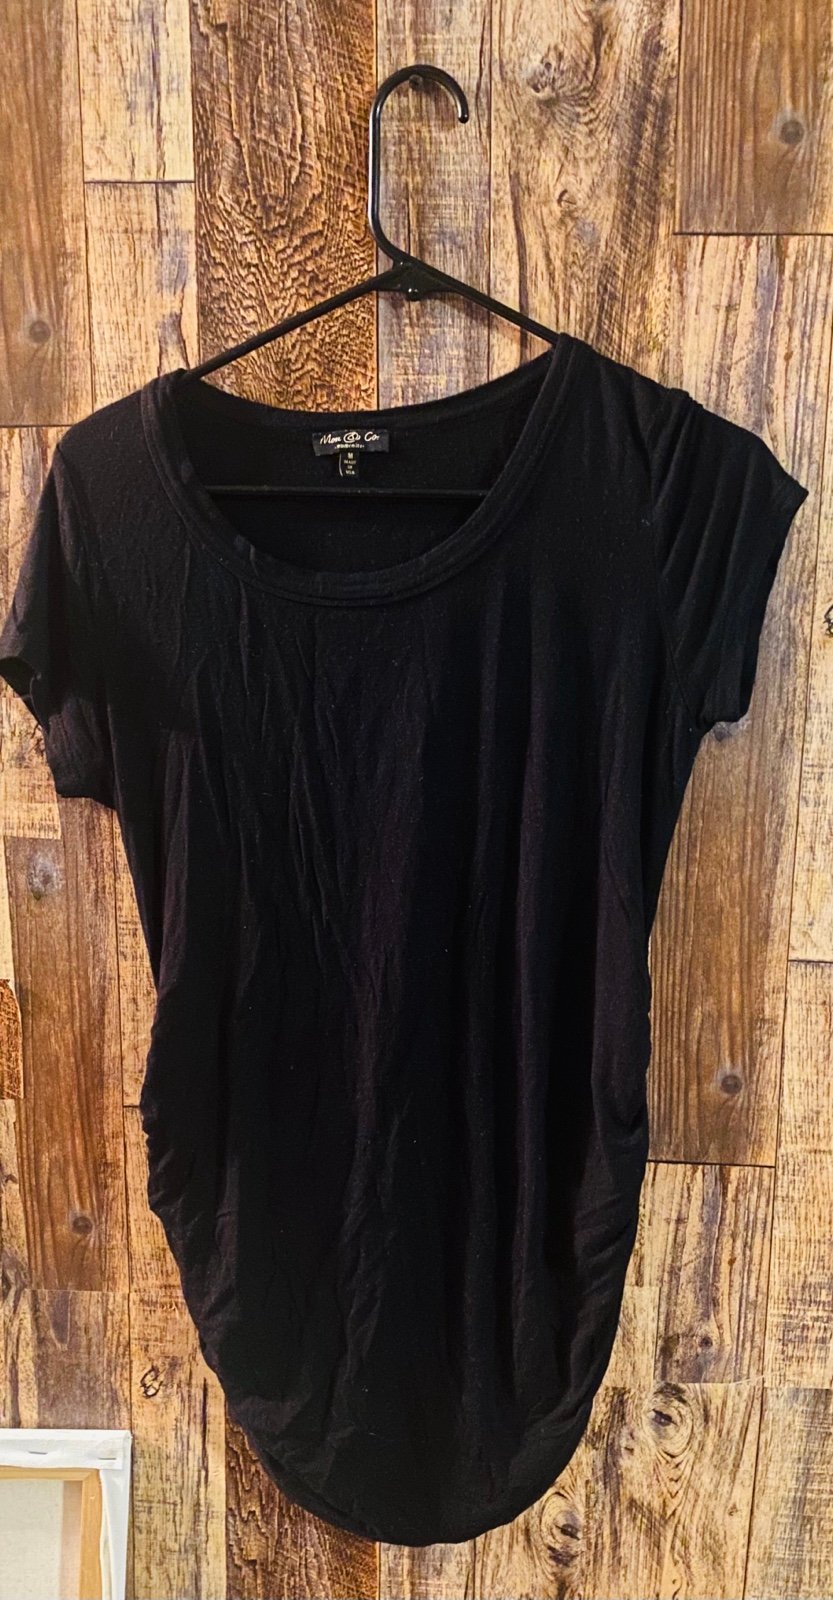 Great Mom & Co women´s maternity short sleeve T-shirt black size medium. JoPYGmJaJ Great